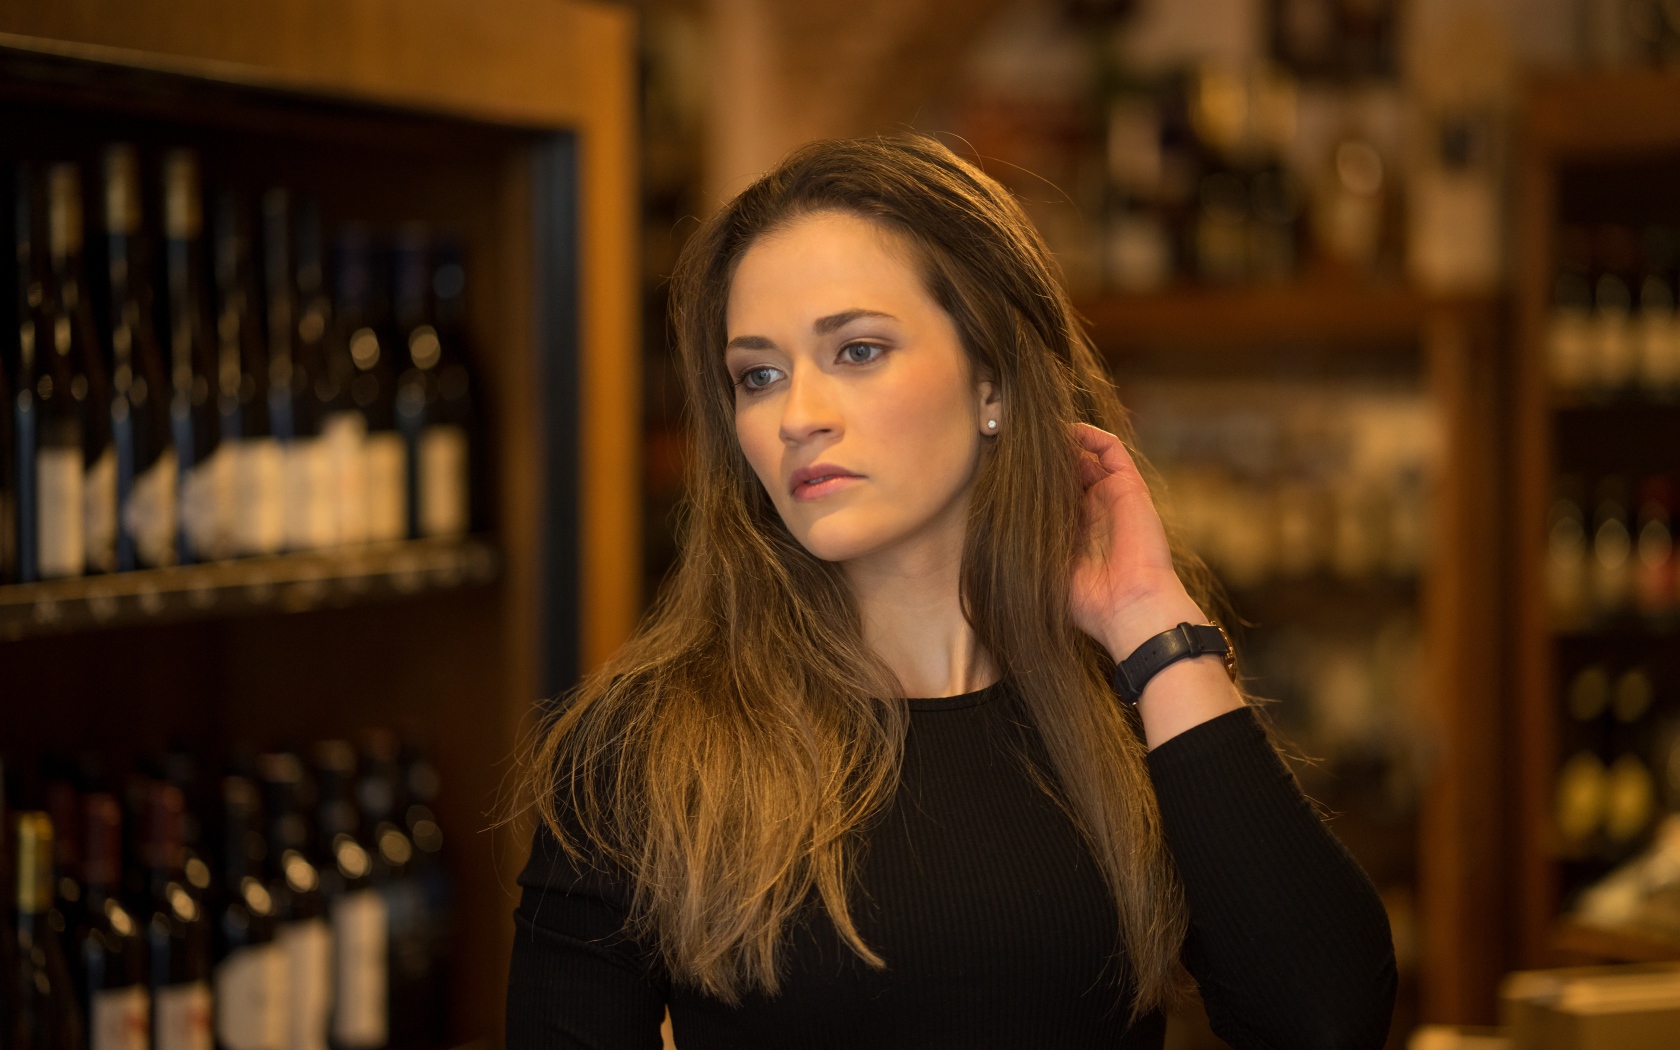 Beautiful brunette girl in a wine cellar